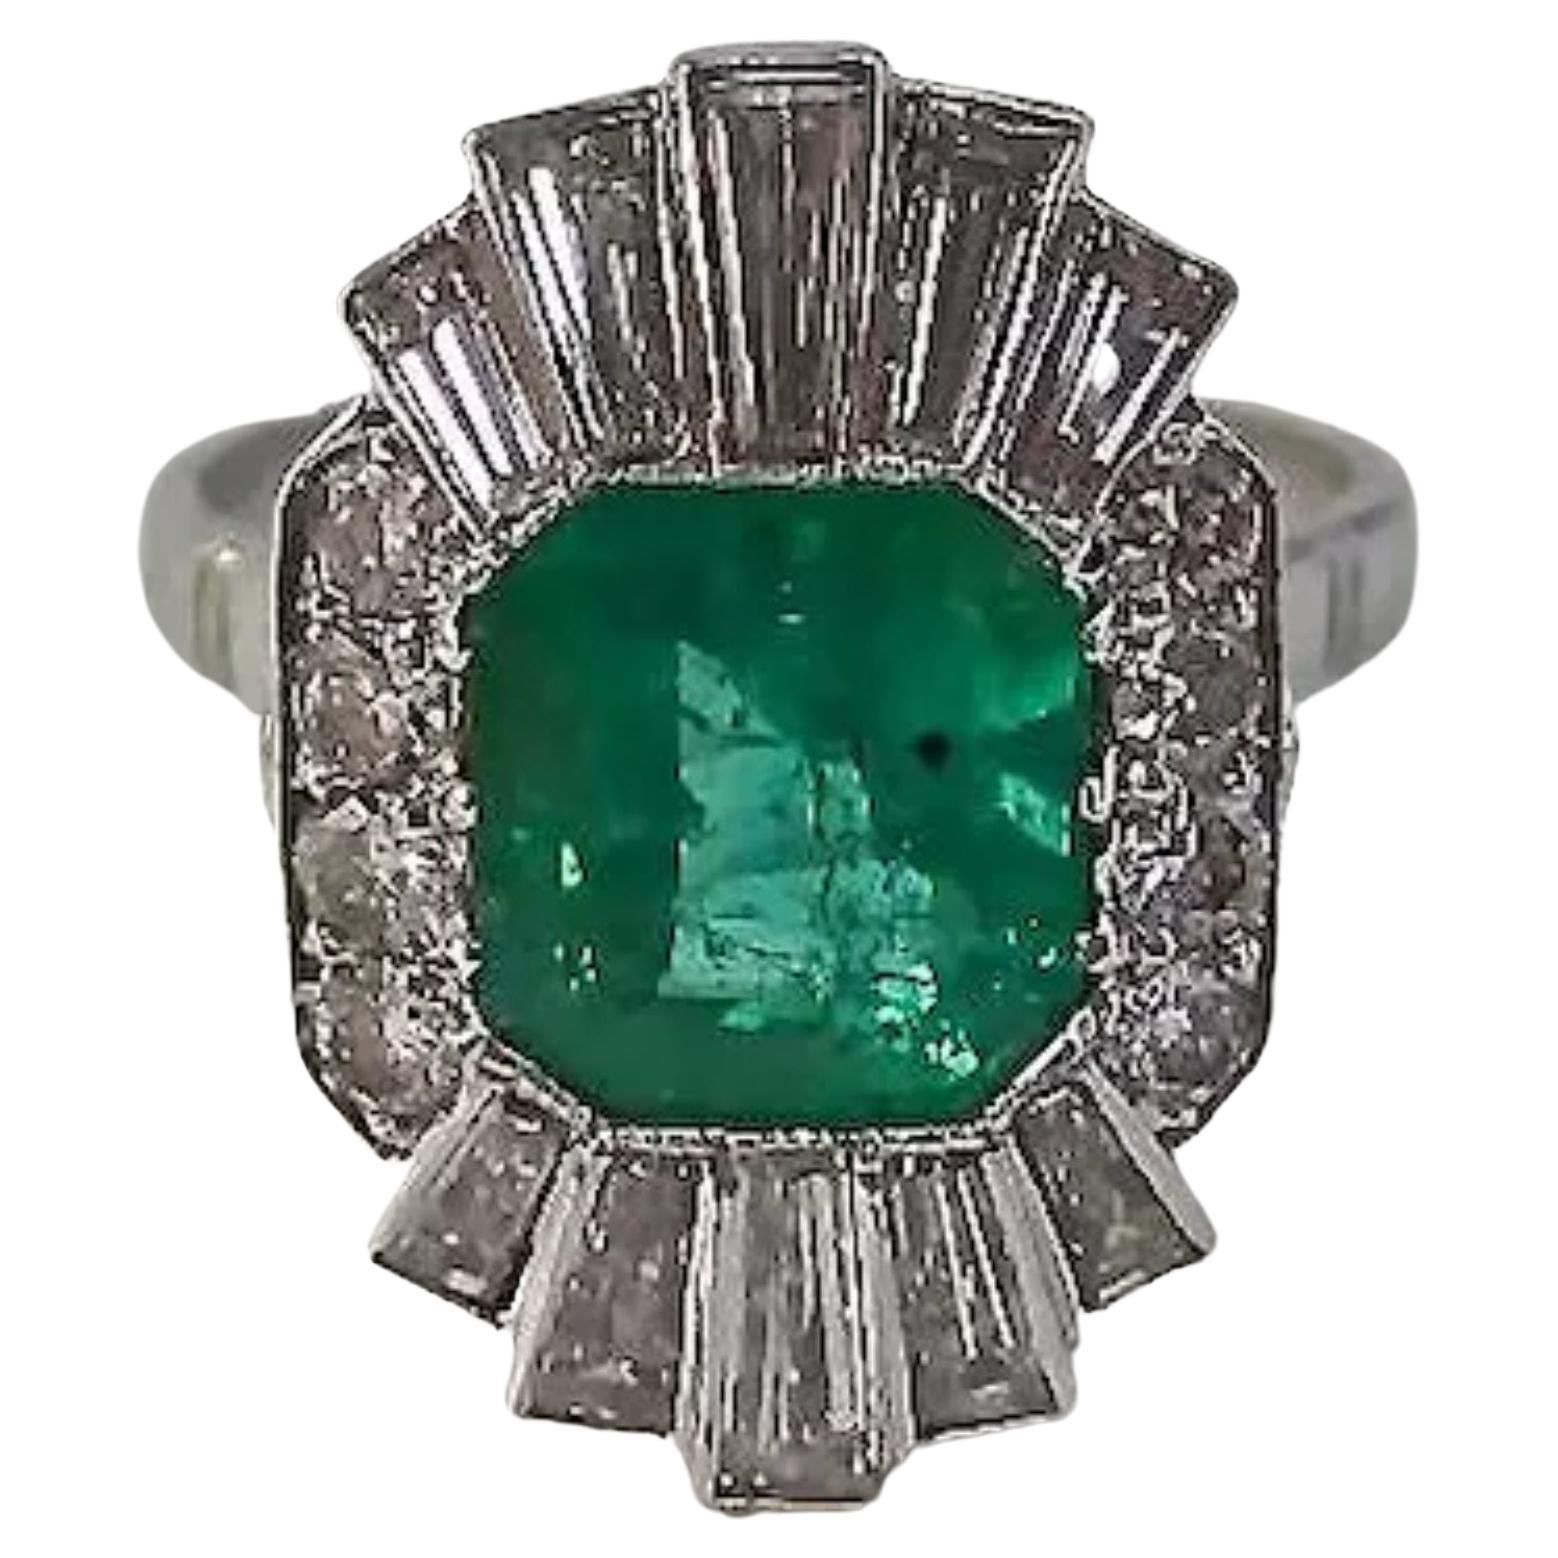 2.9 Carat Emerald Diamond Engagement Ring, Art Deco Emerald Diamond Wedding Ring